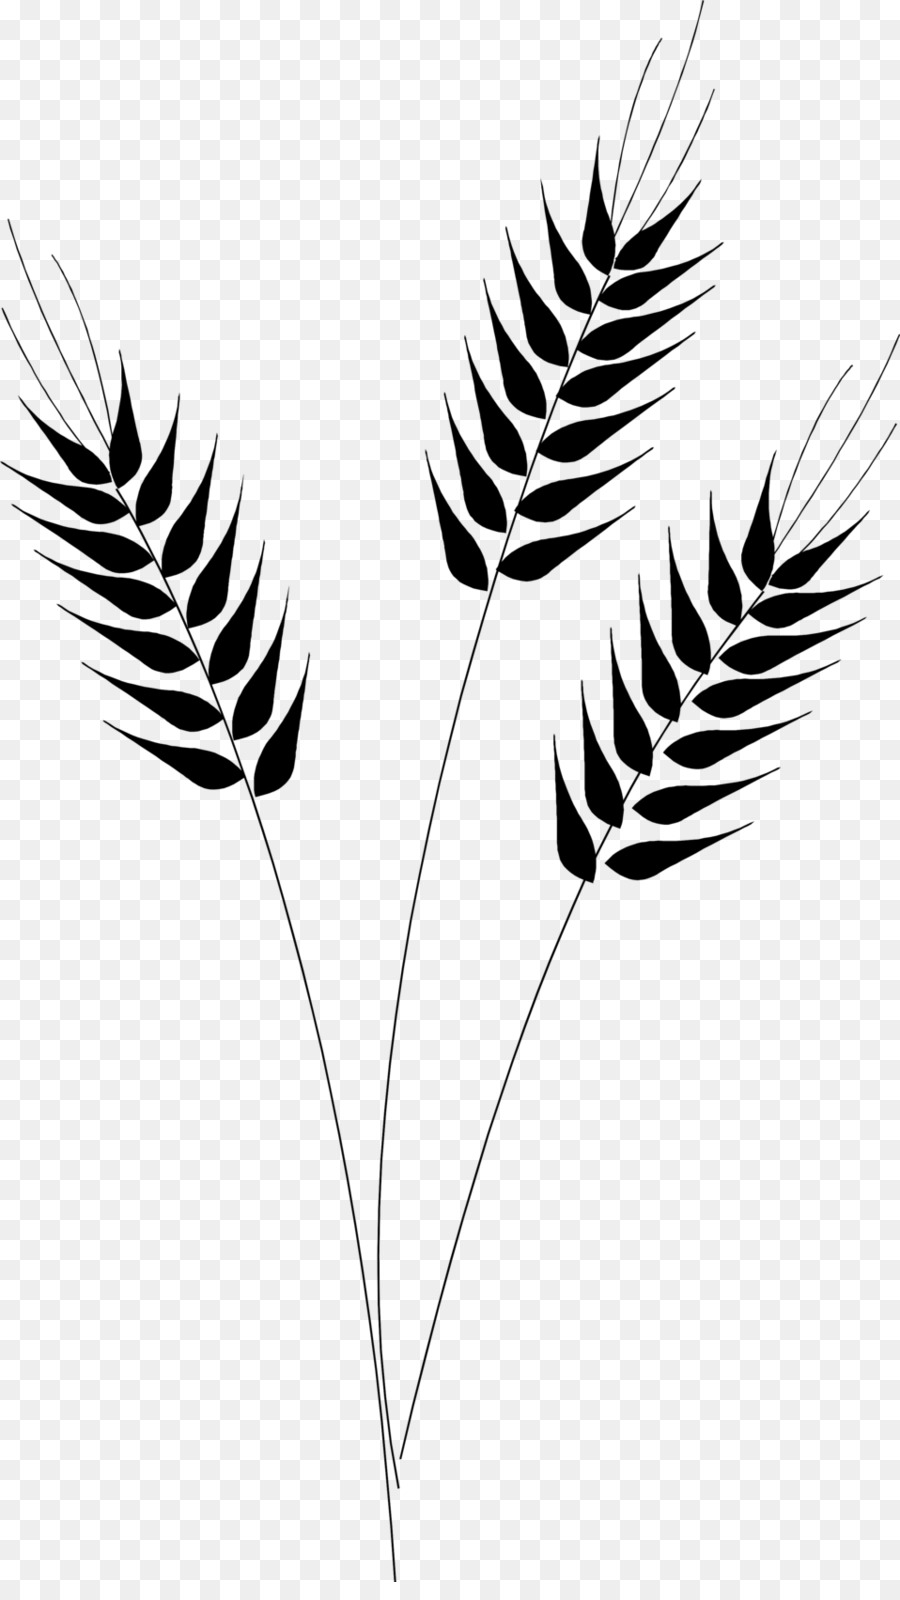 Grains clipart wheat stem. Desktop wallpaper clip art